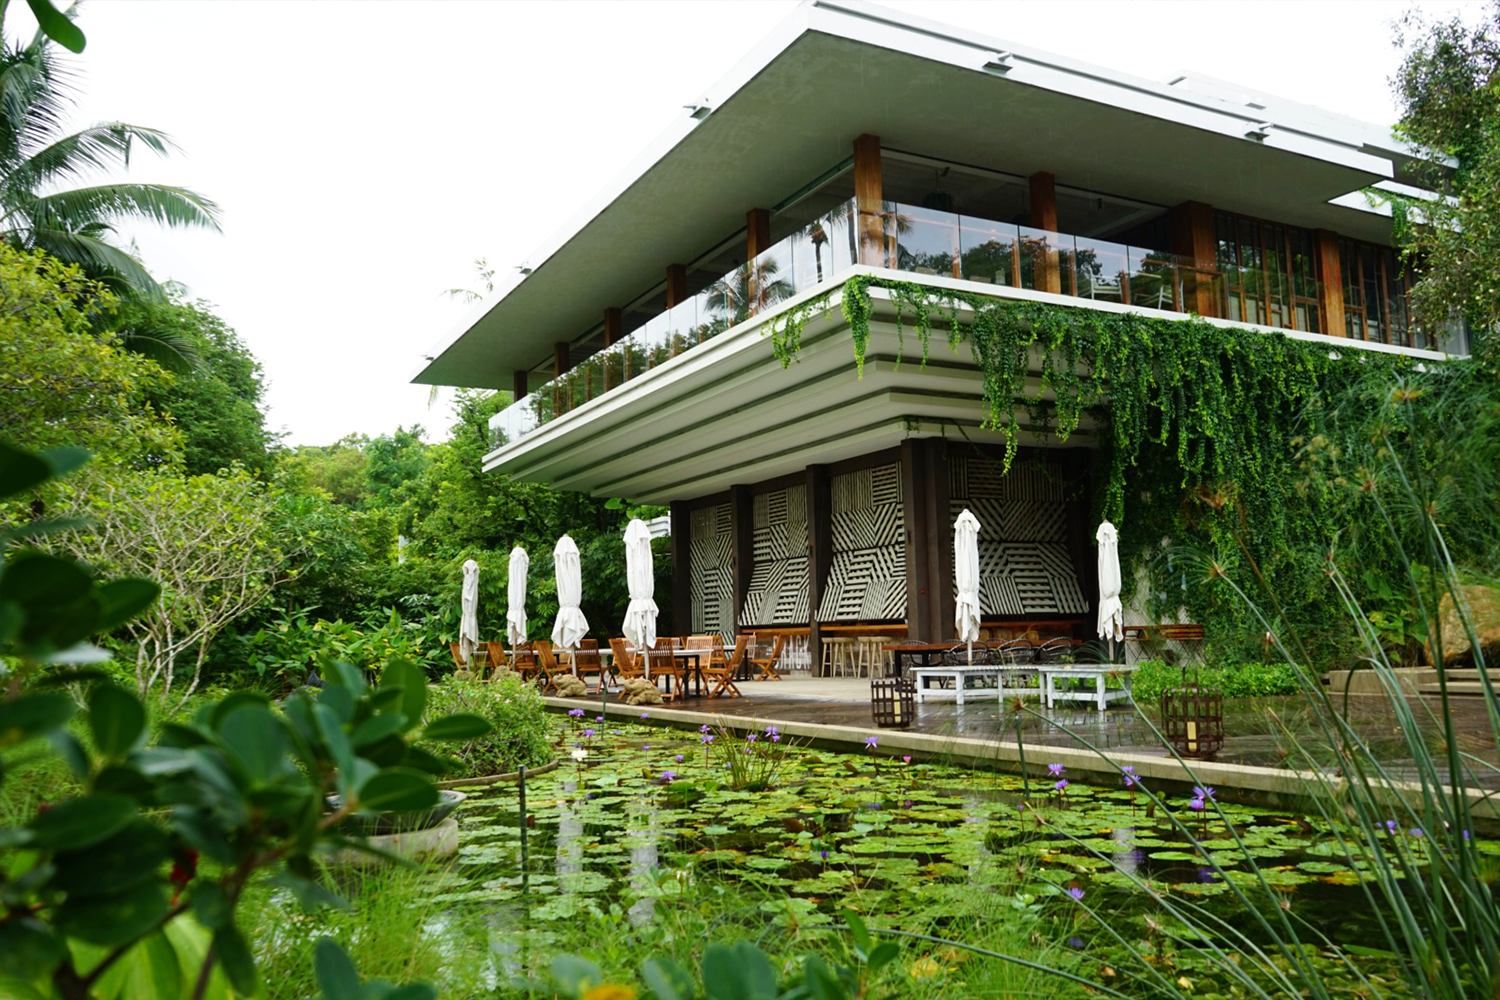 Rosewood Gardens in Phuket, Thailand